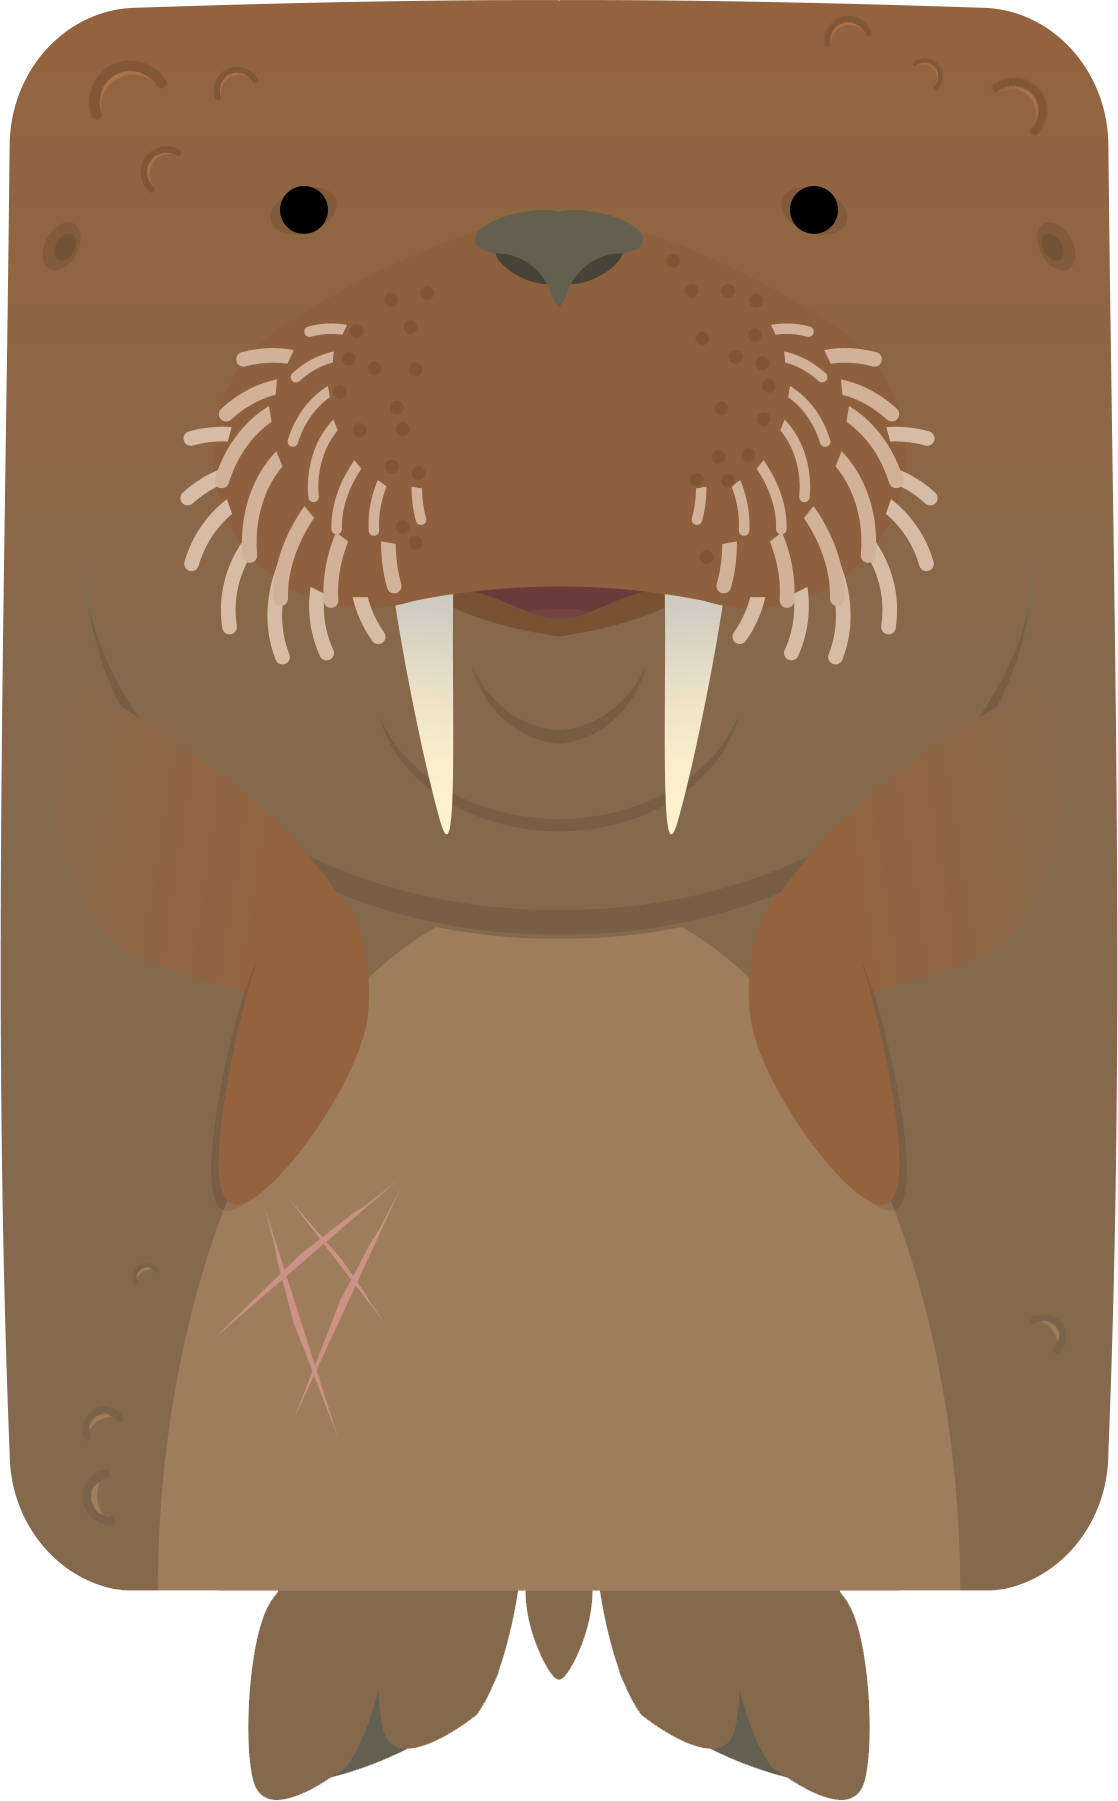 A Walrus With White Teeth